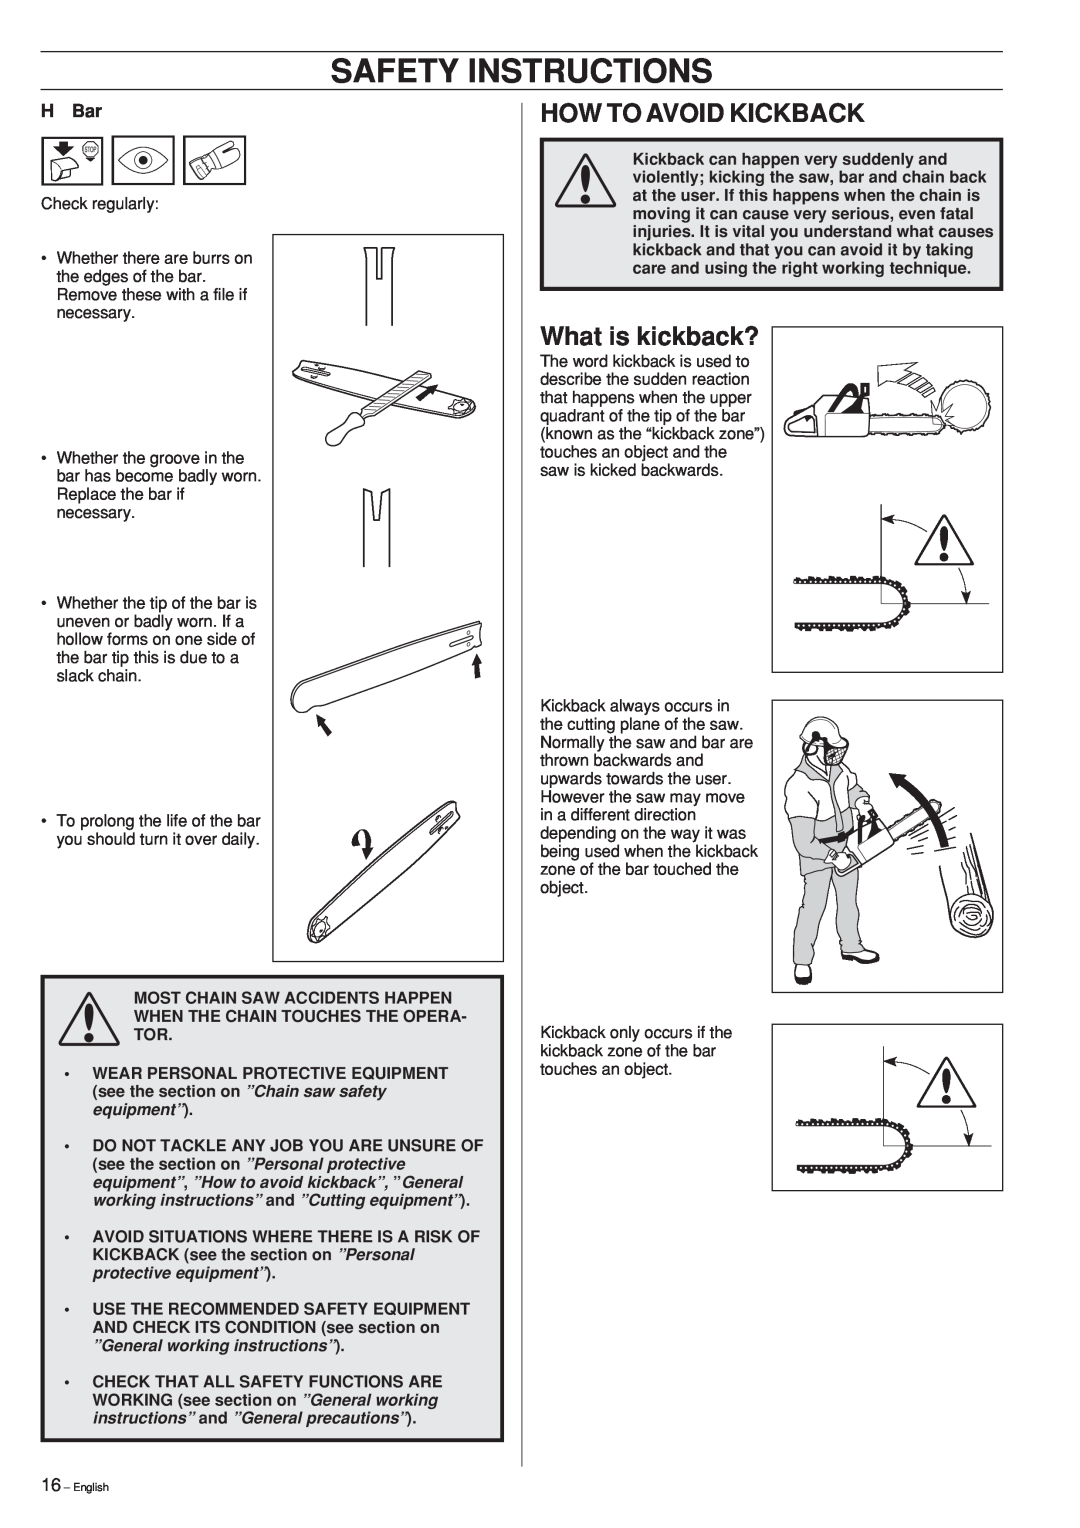 Husqvarna 357XP, 359 manual How To Avoid Kickback, What is kickback?, H Bar, Safety Instructions 